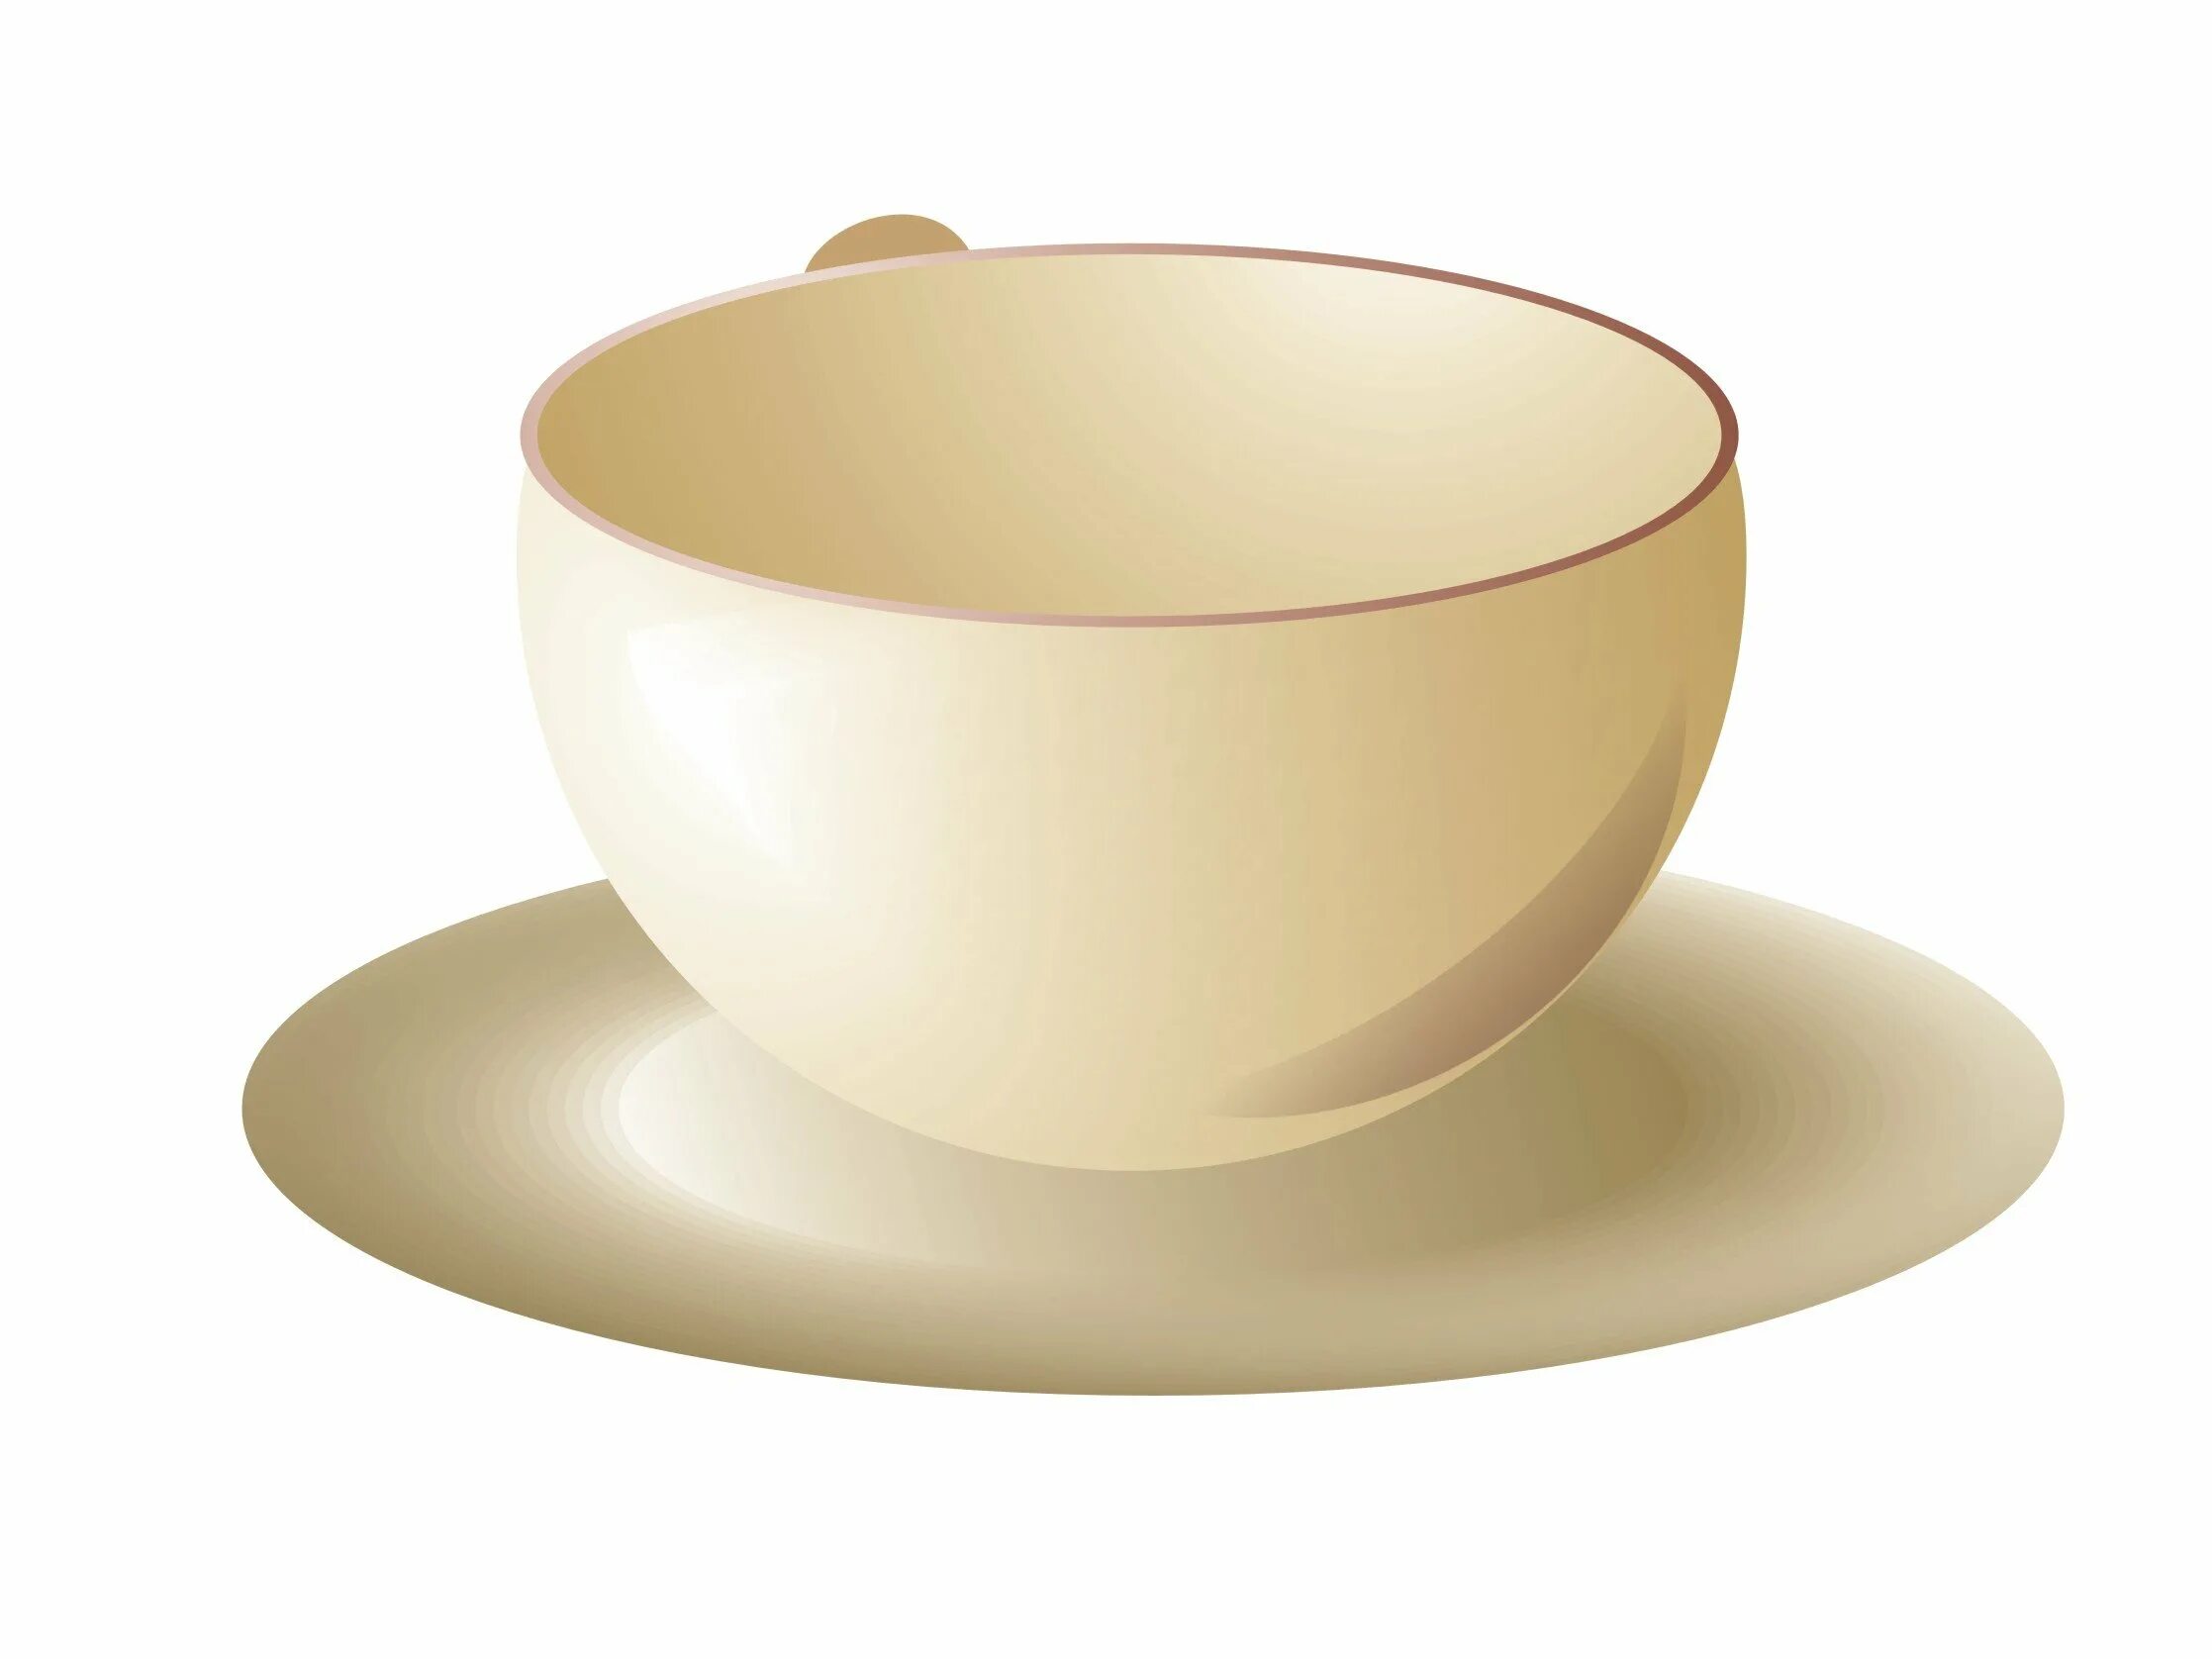 Картинка чашка. Чашки. Чашка на белом фоне. Изображение чашки. Чашка с блюдцем на белом фоне.